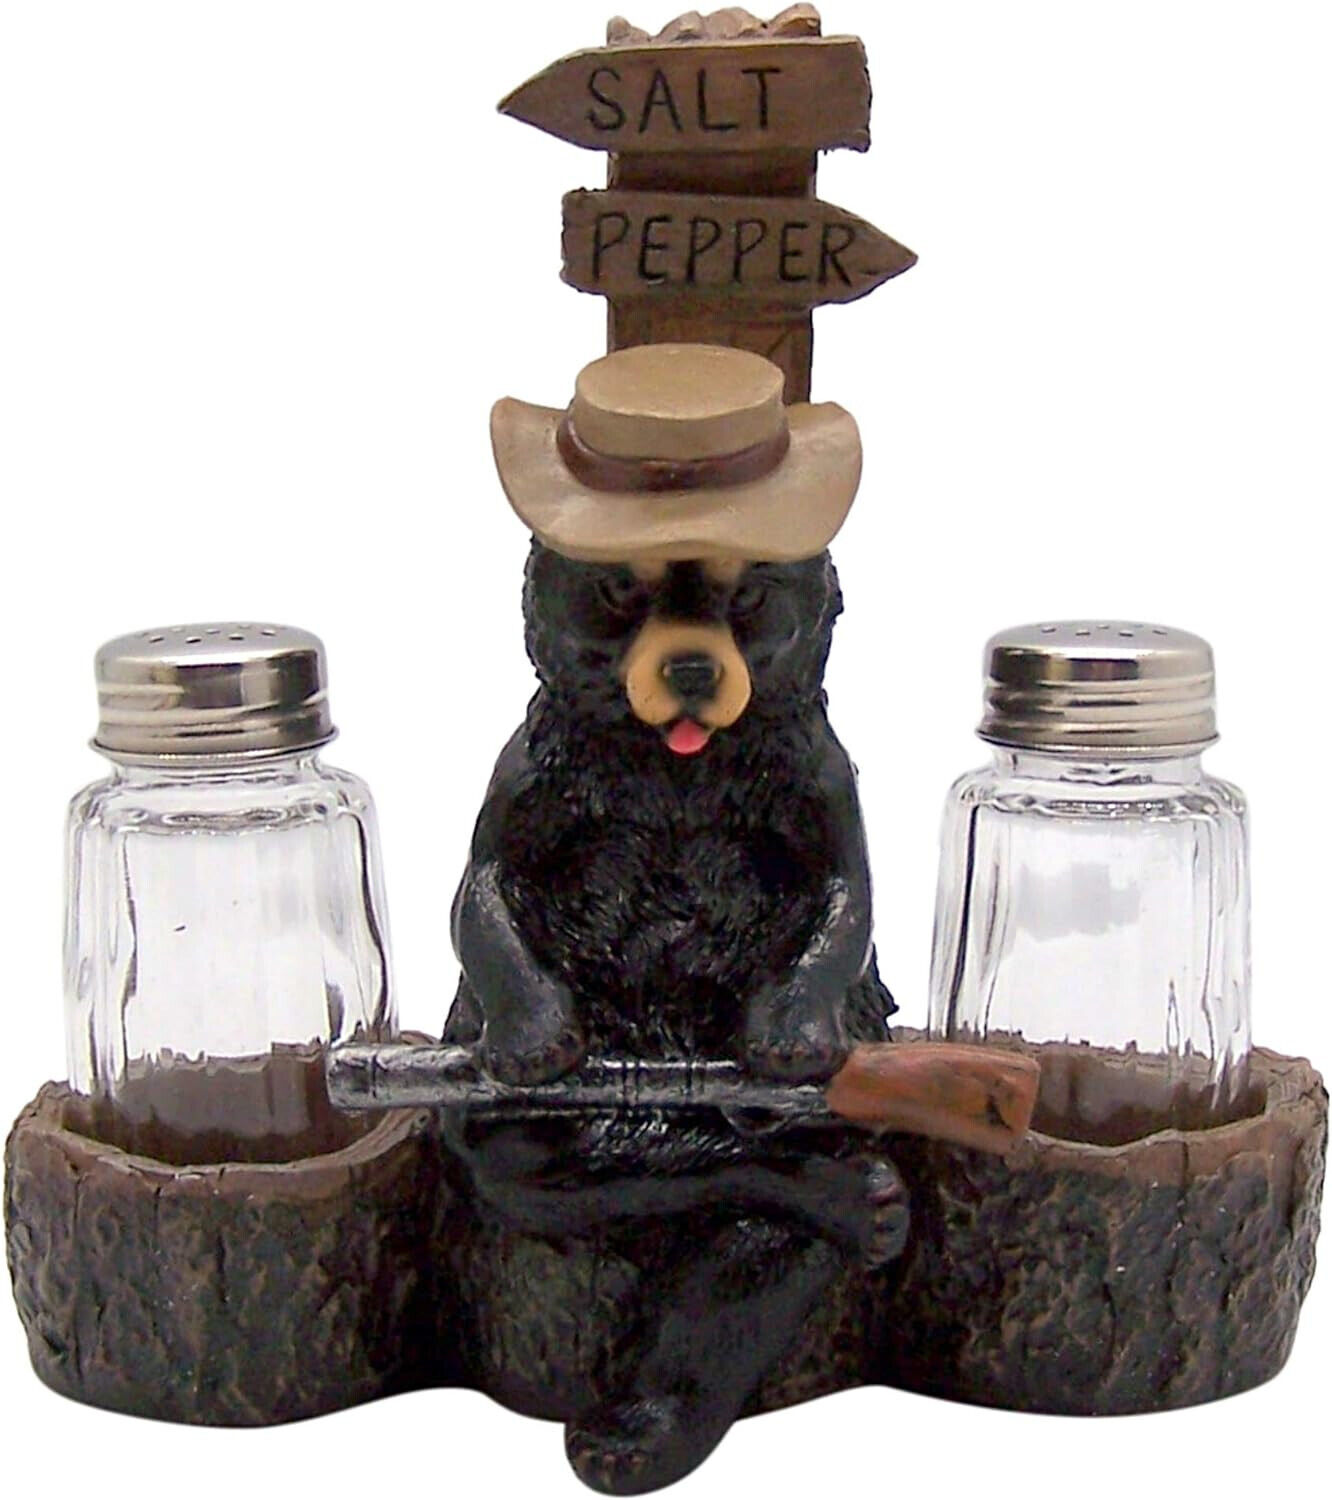 Protective Black Bear Salt & Pepper Shaker Set, Rustic Cabin Decor